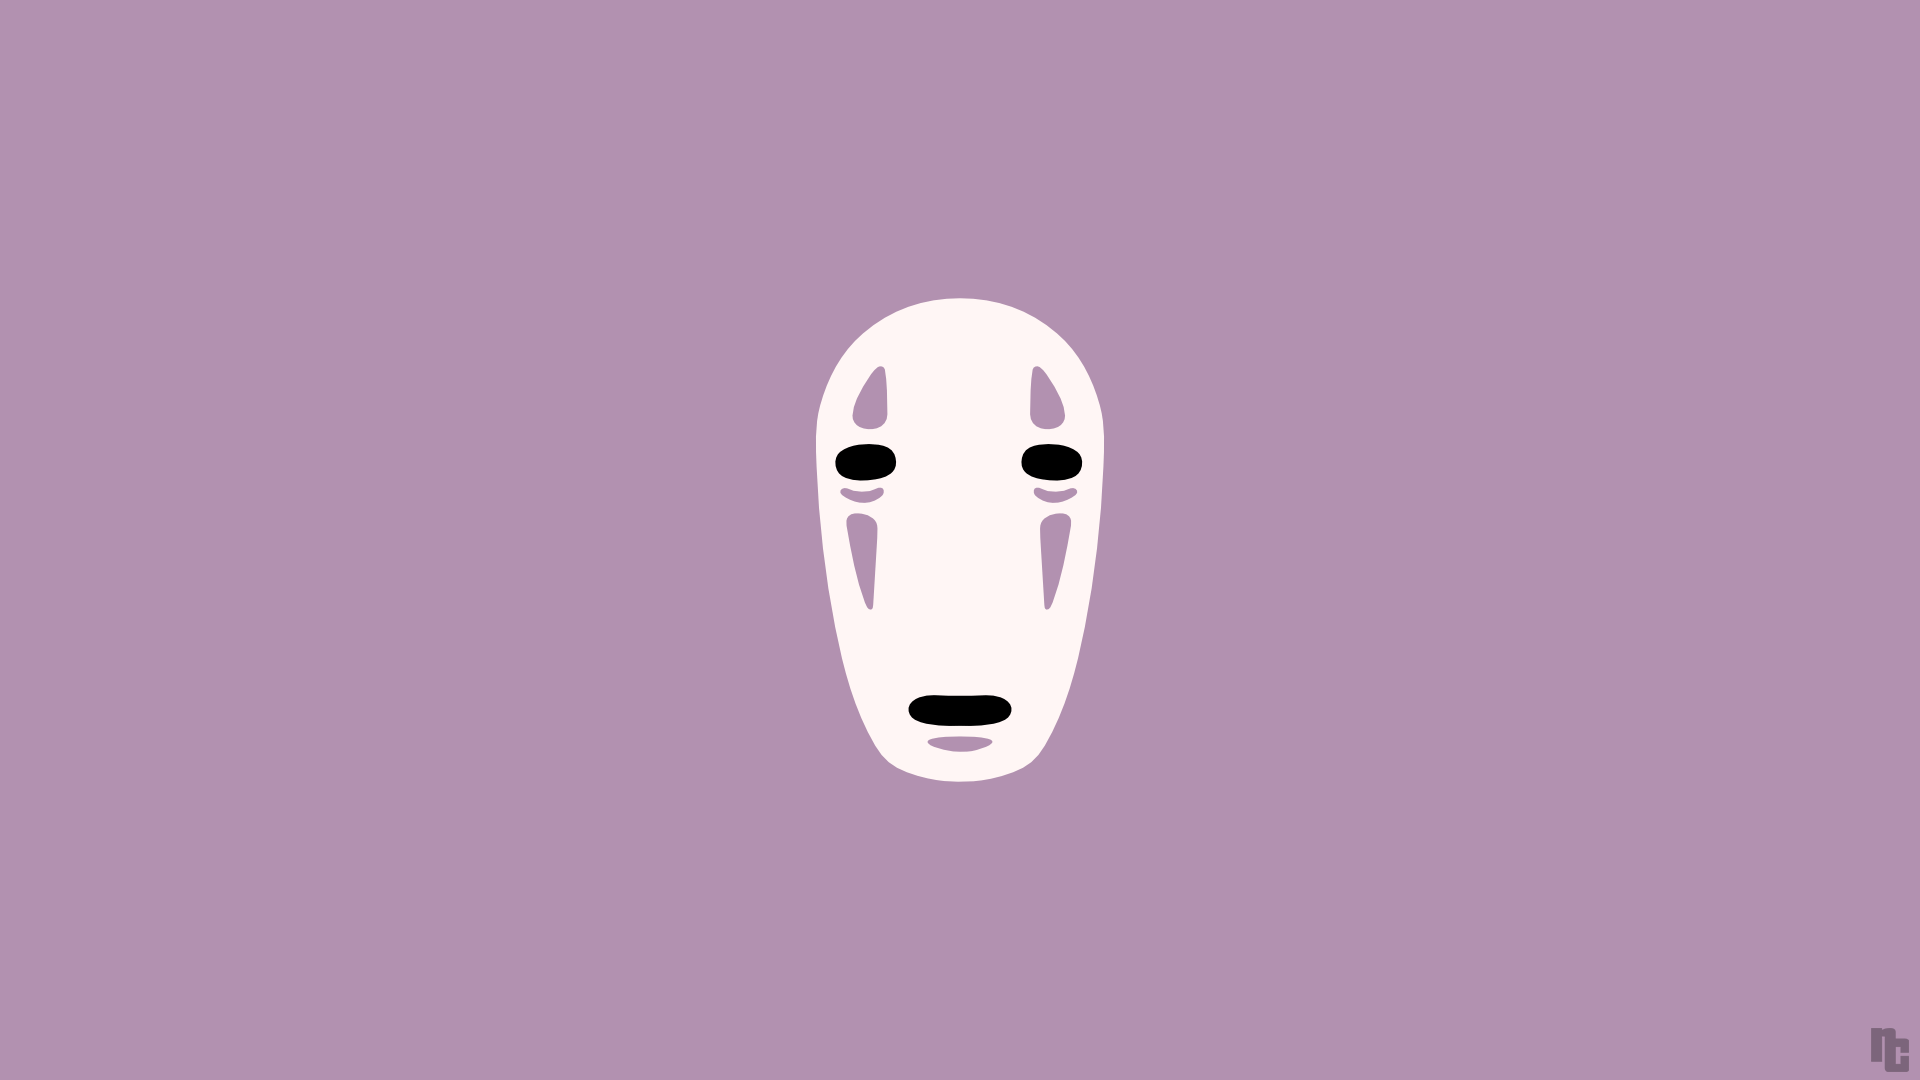 No Face (Spirited Away)